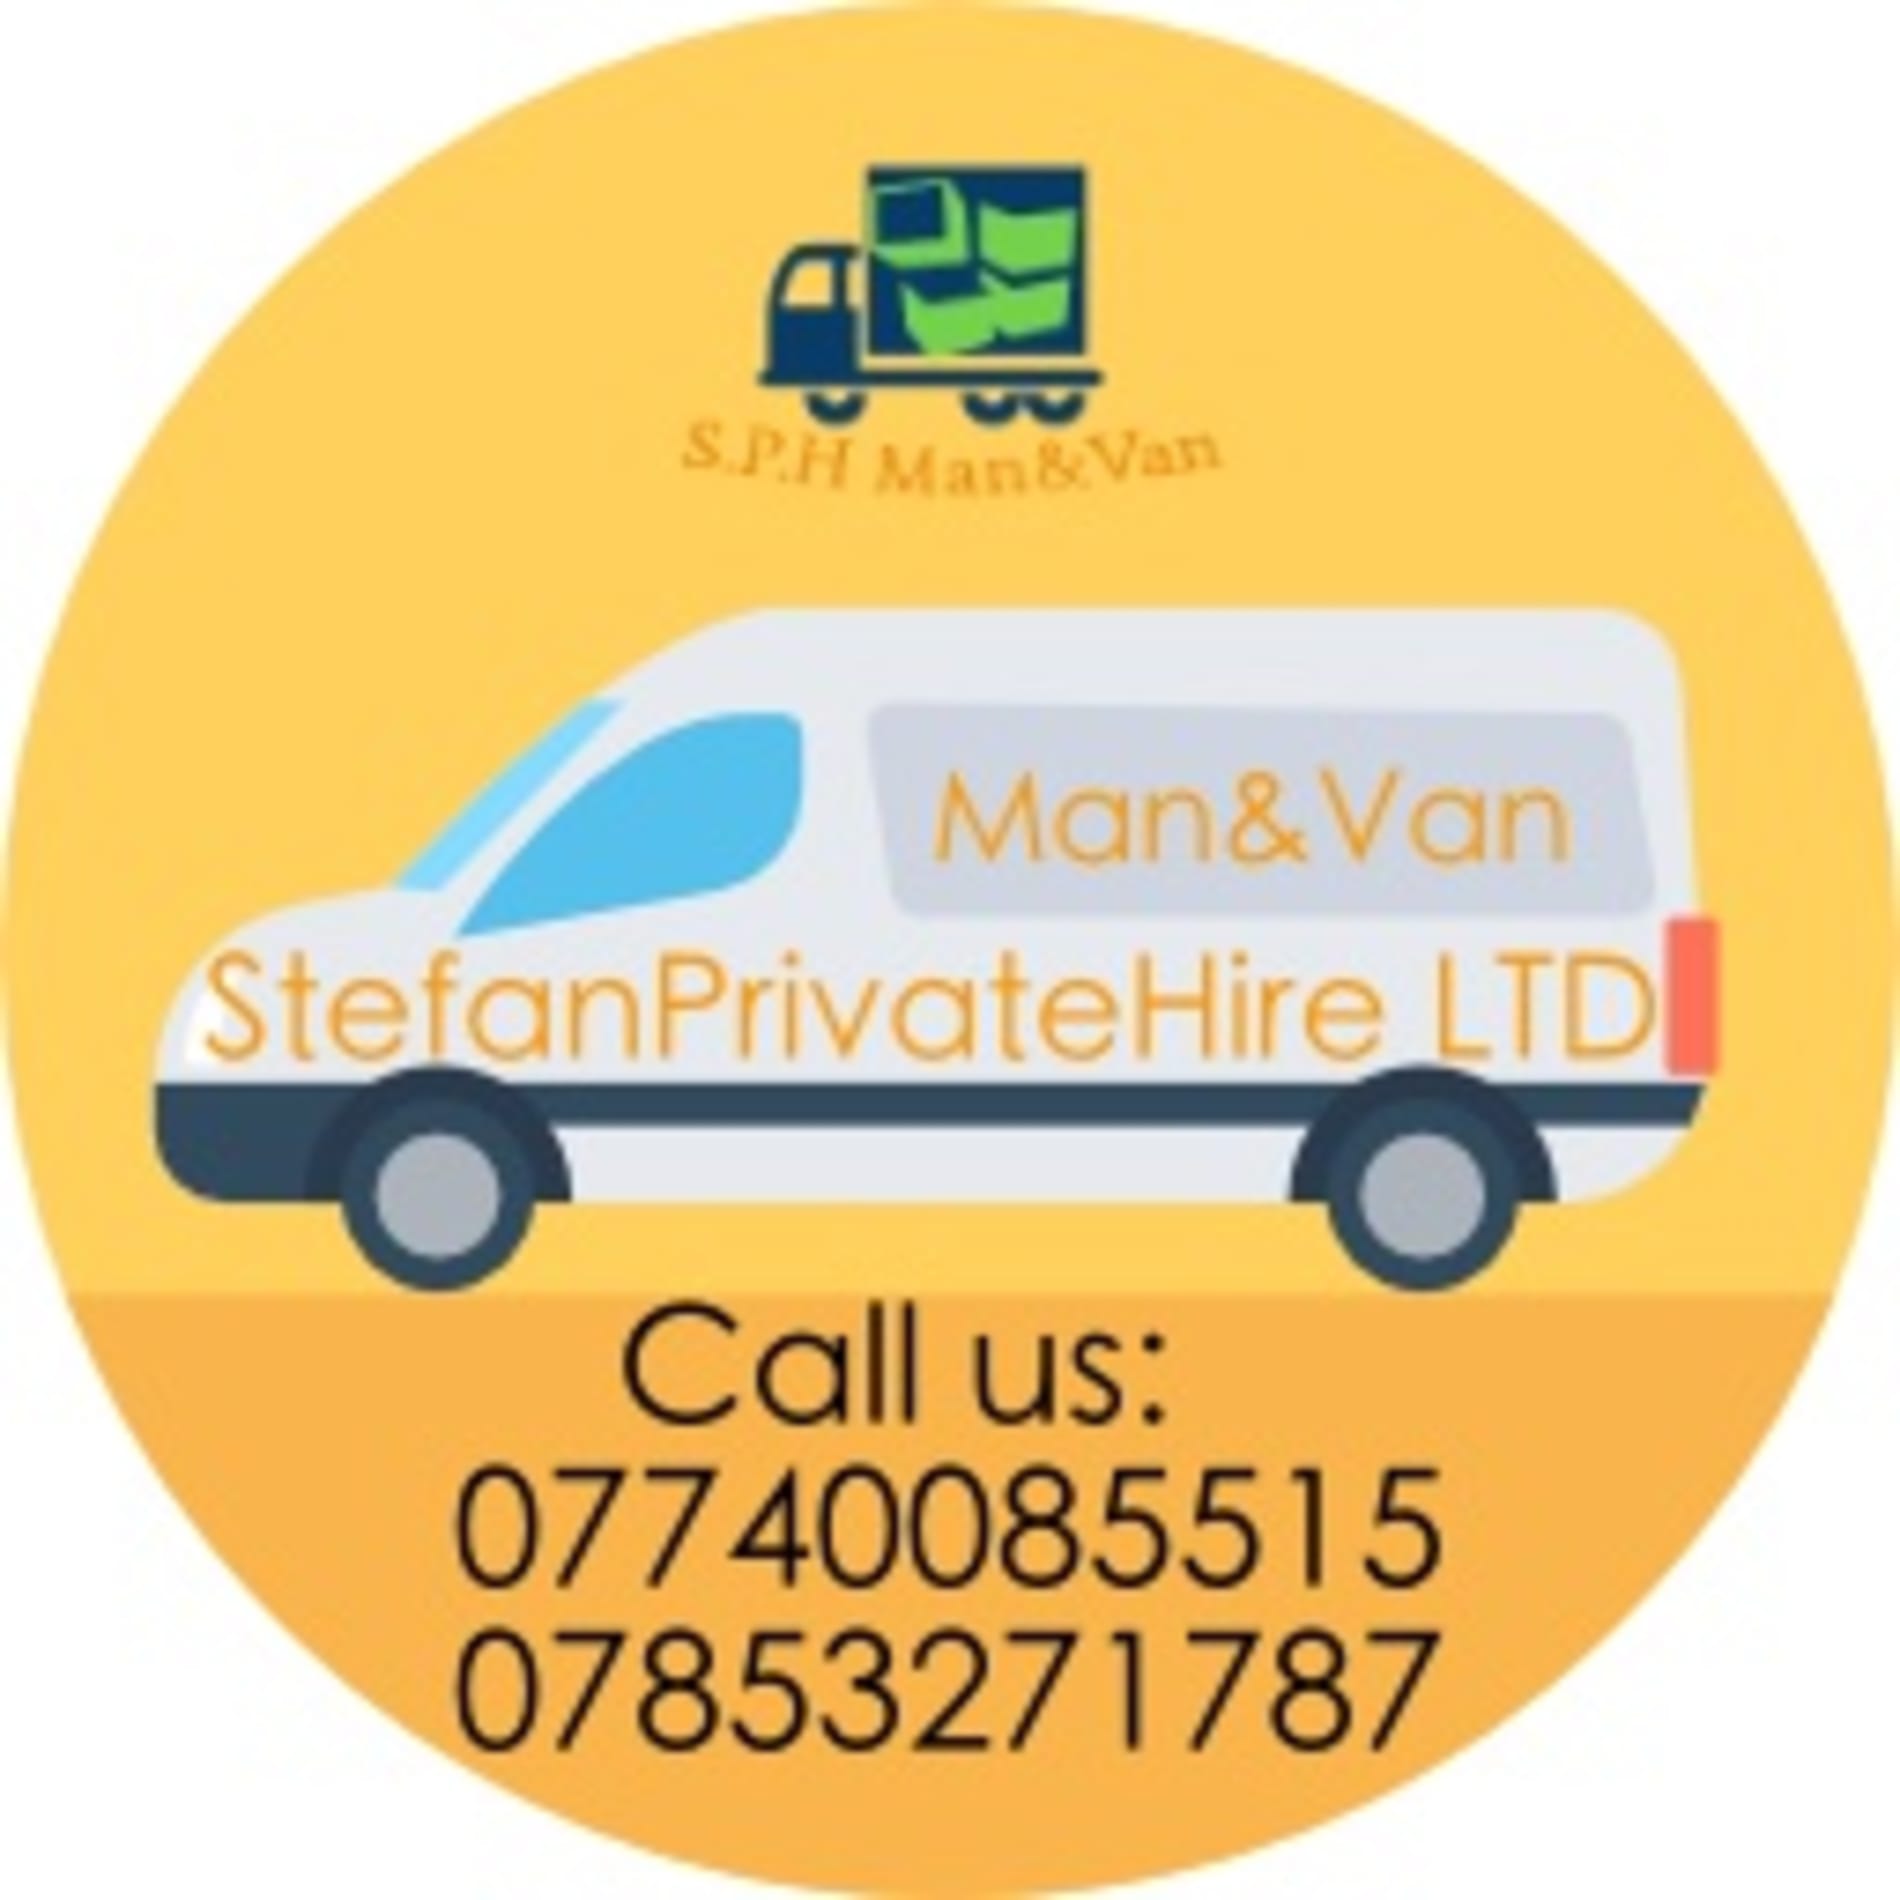 Stefan Private Hire Ltd